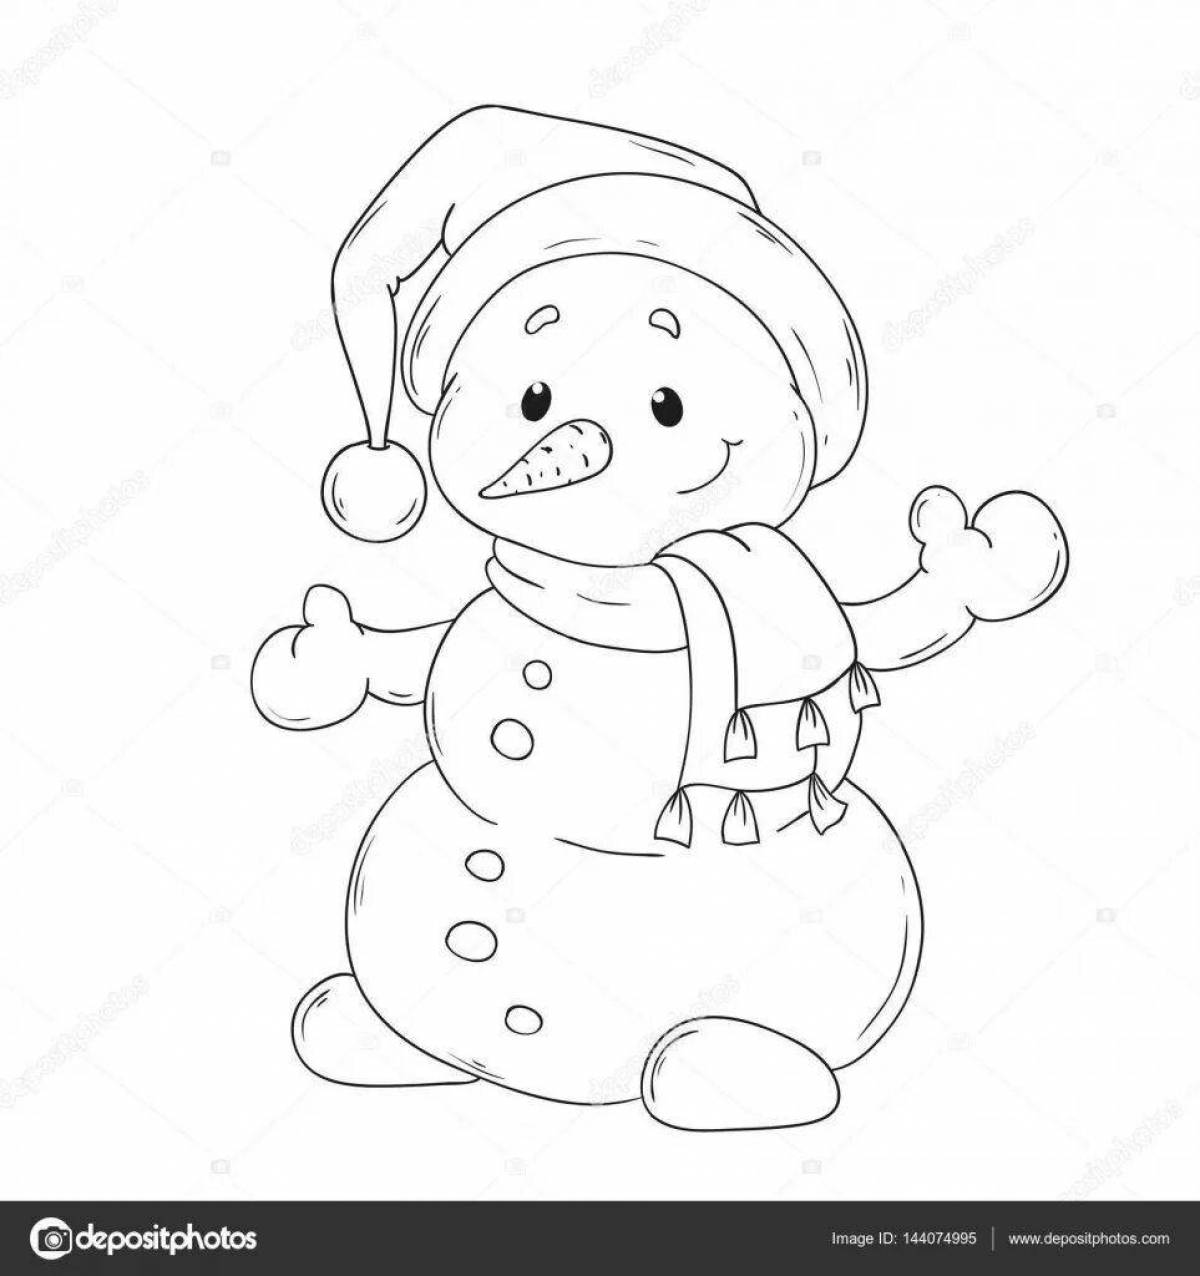 Zani funny snowman coloring book for kids